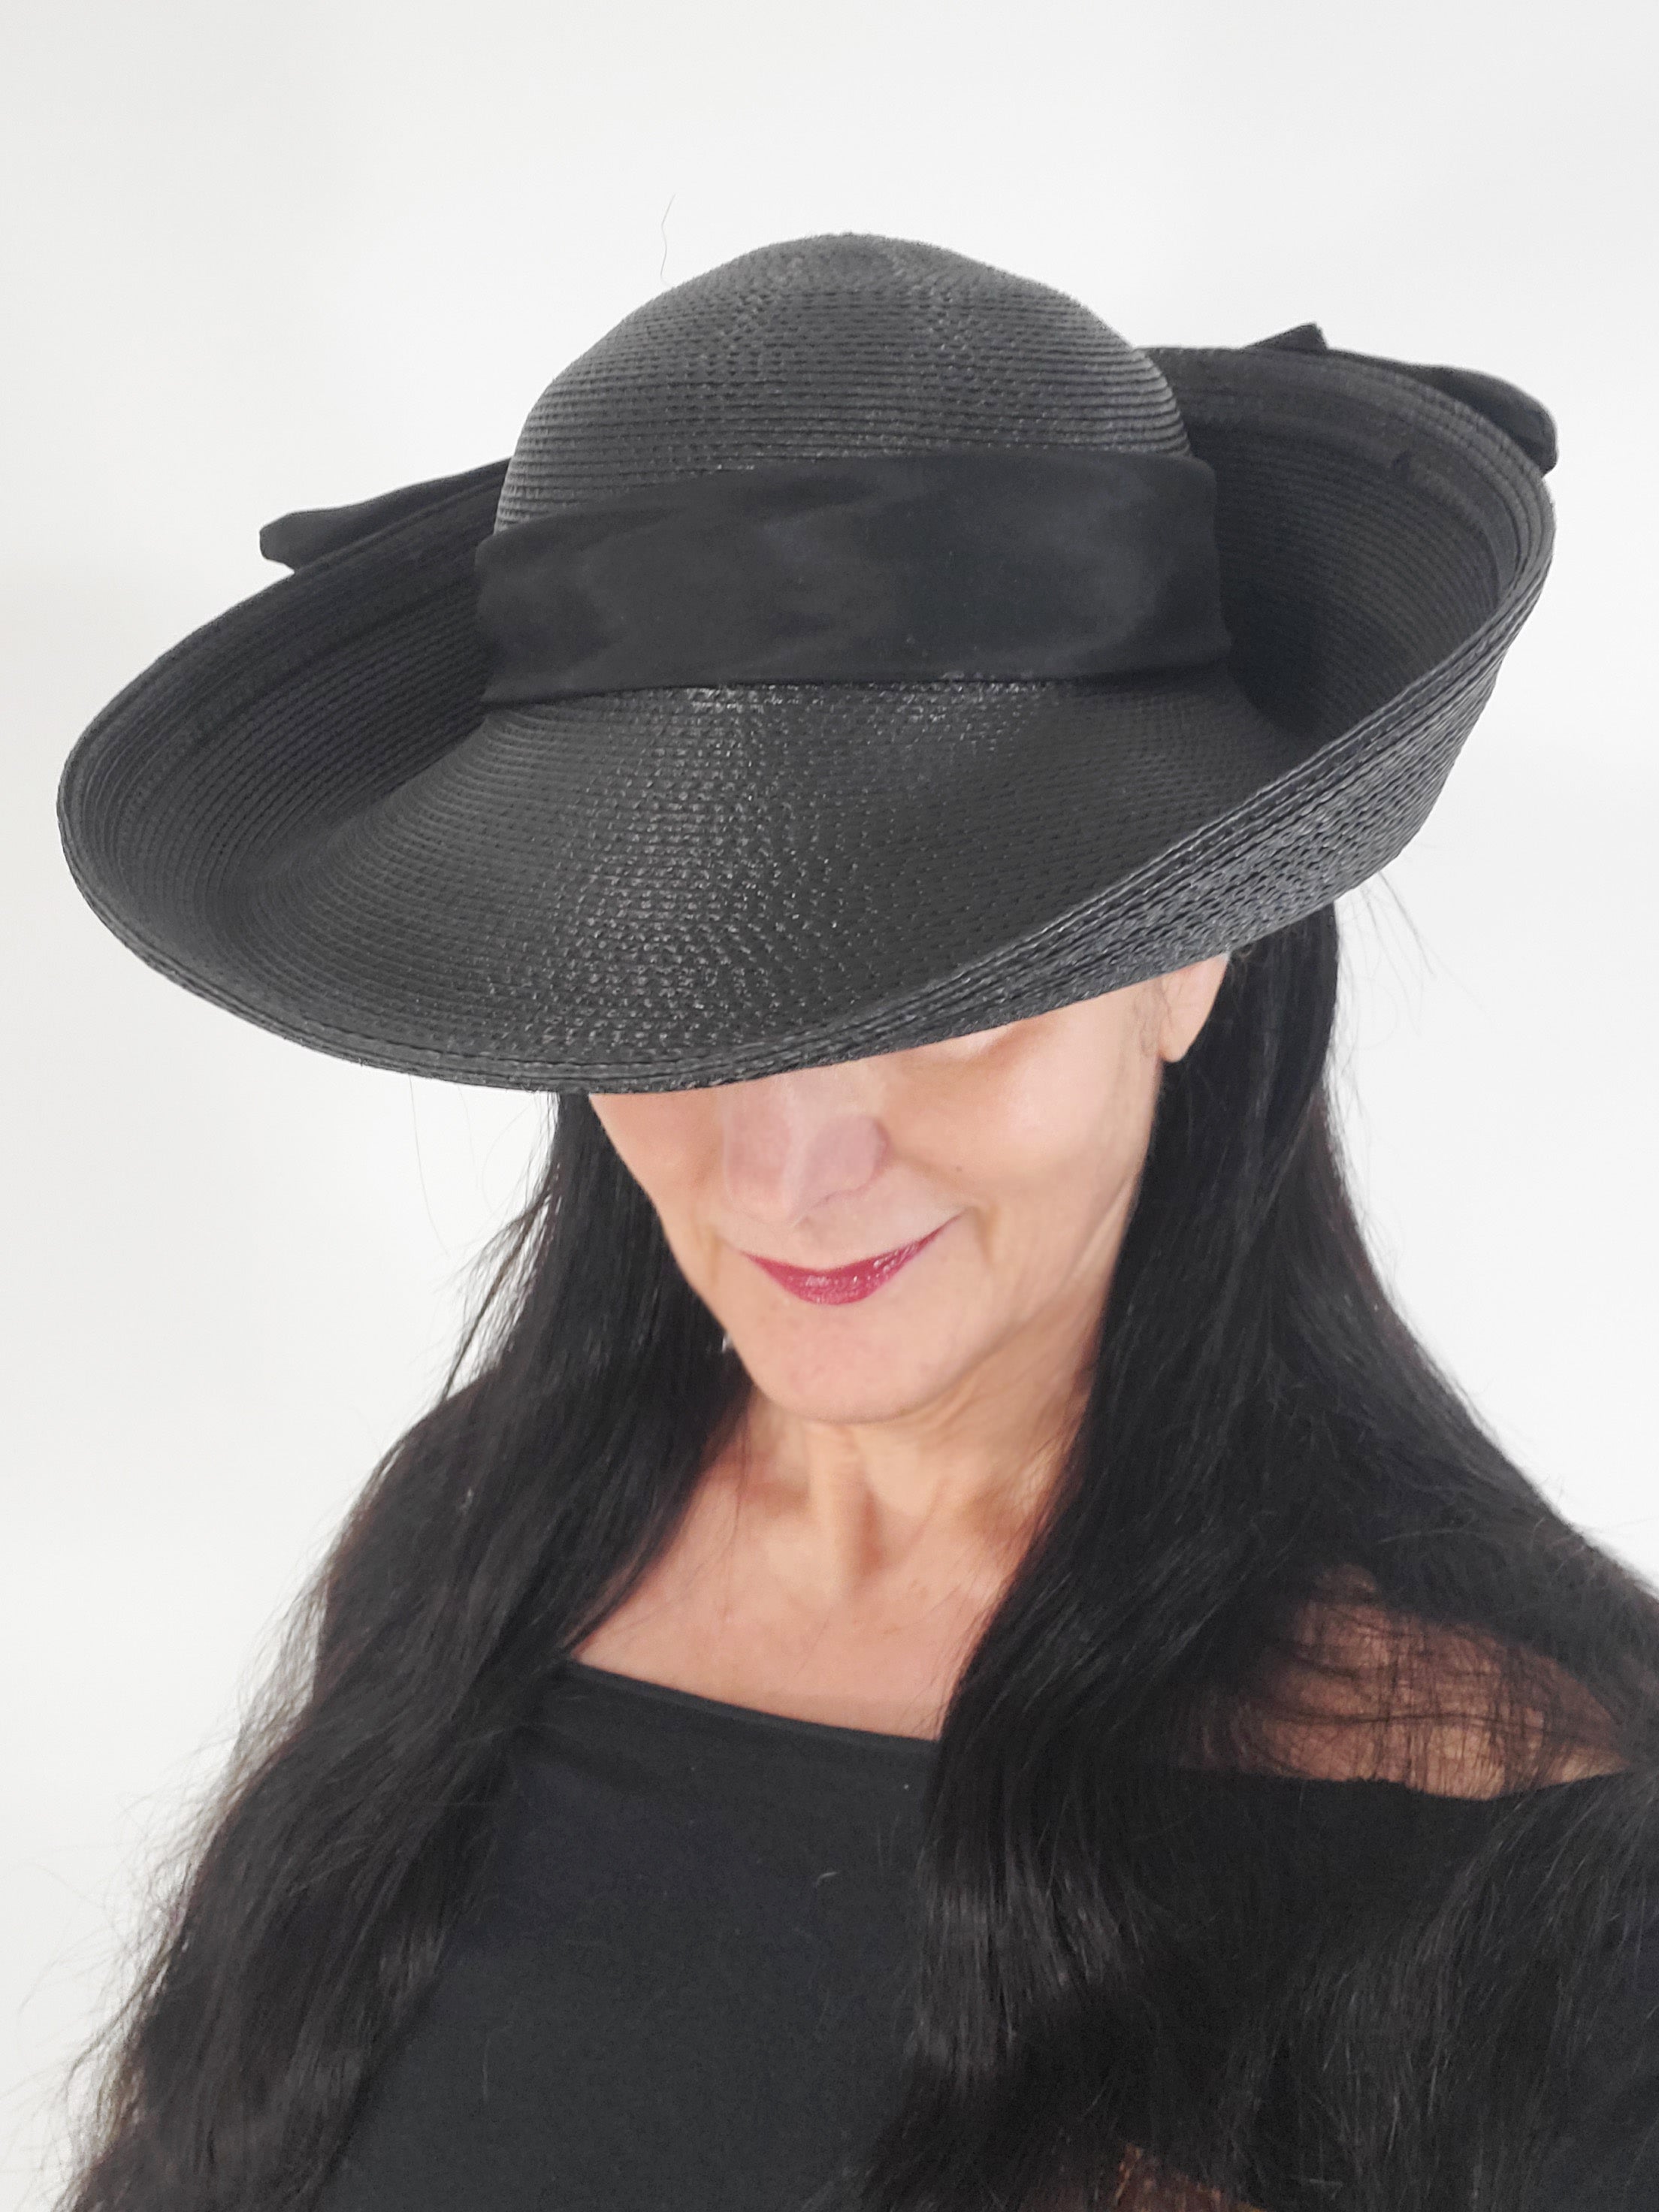 Yves Saint Laurent Ysl Vintage Glossy Black Straw Hat, 1980s